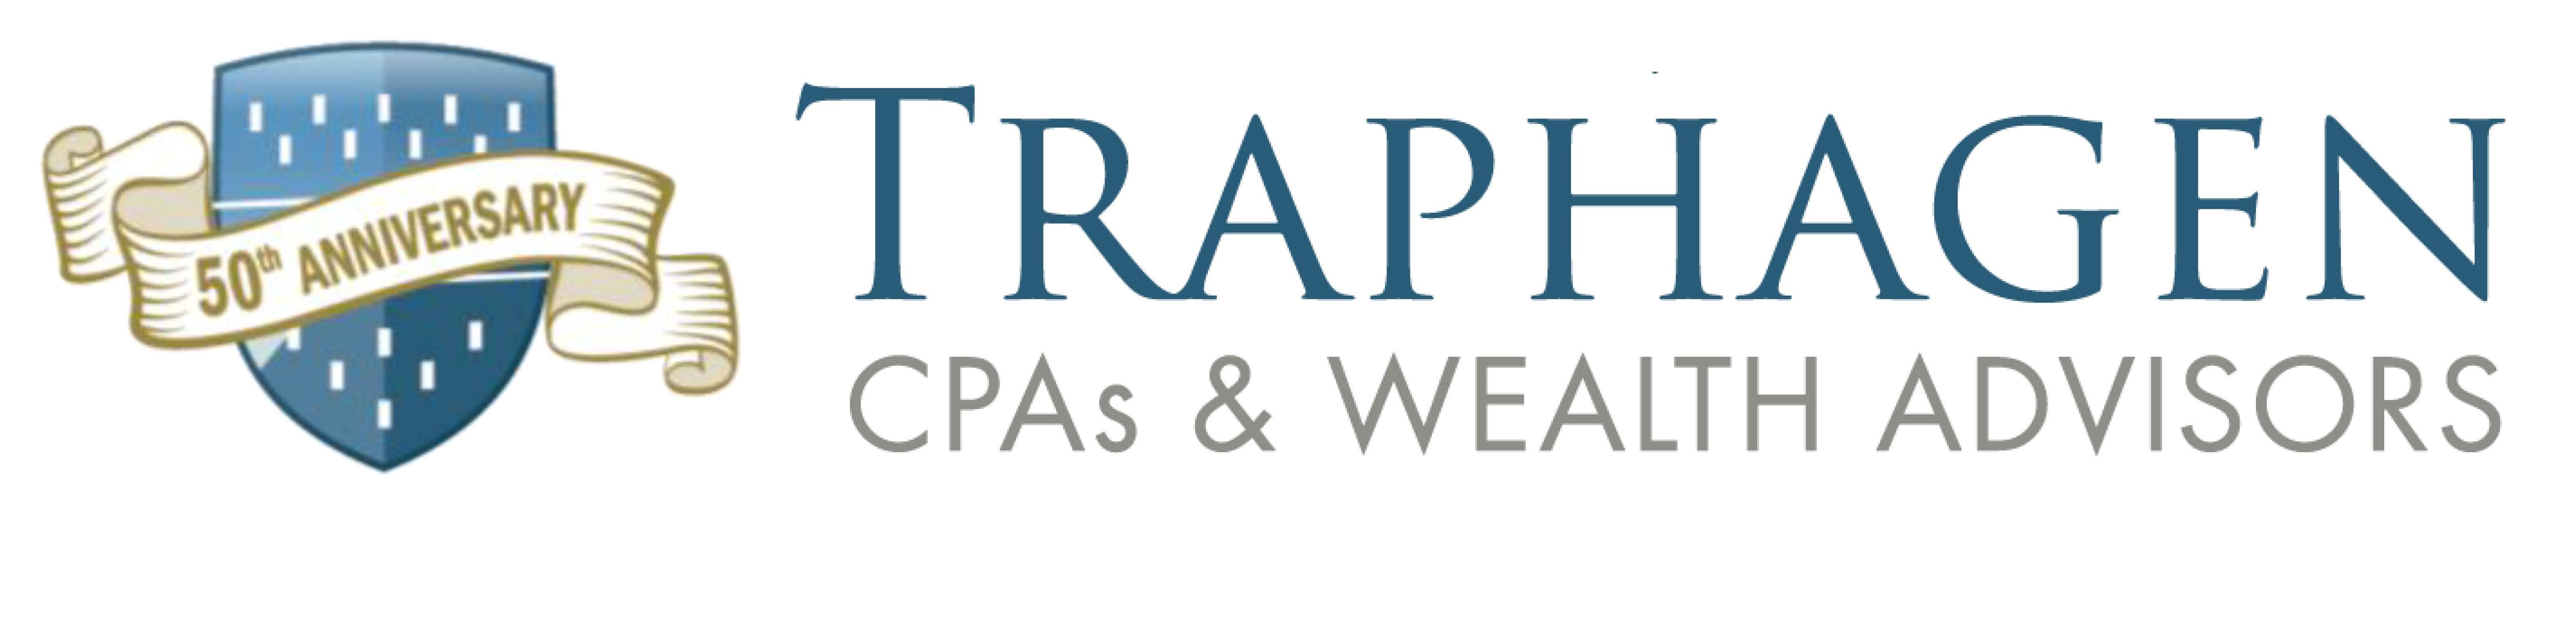 Traphagen Financial Group reviews